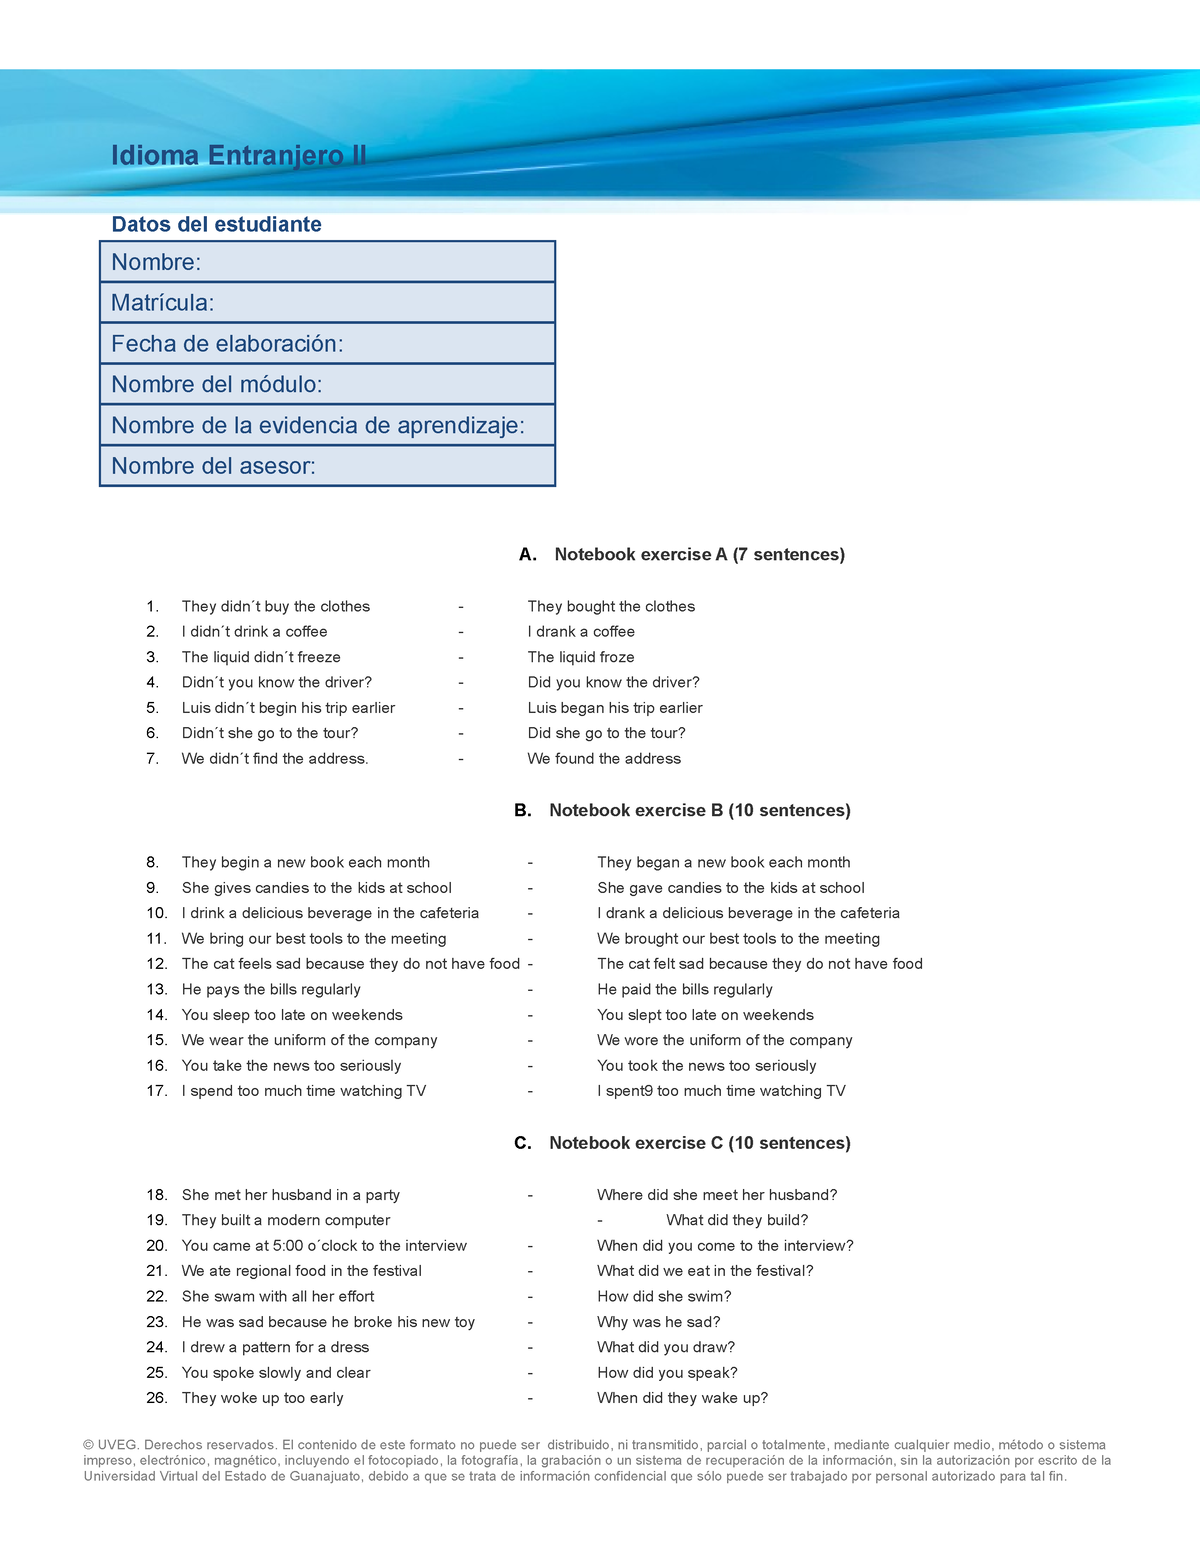 assignment 3 questionnaire u2 idioma extranjero ii uveg